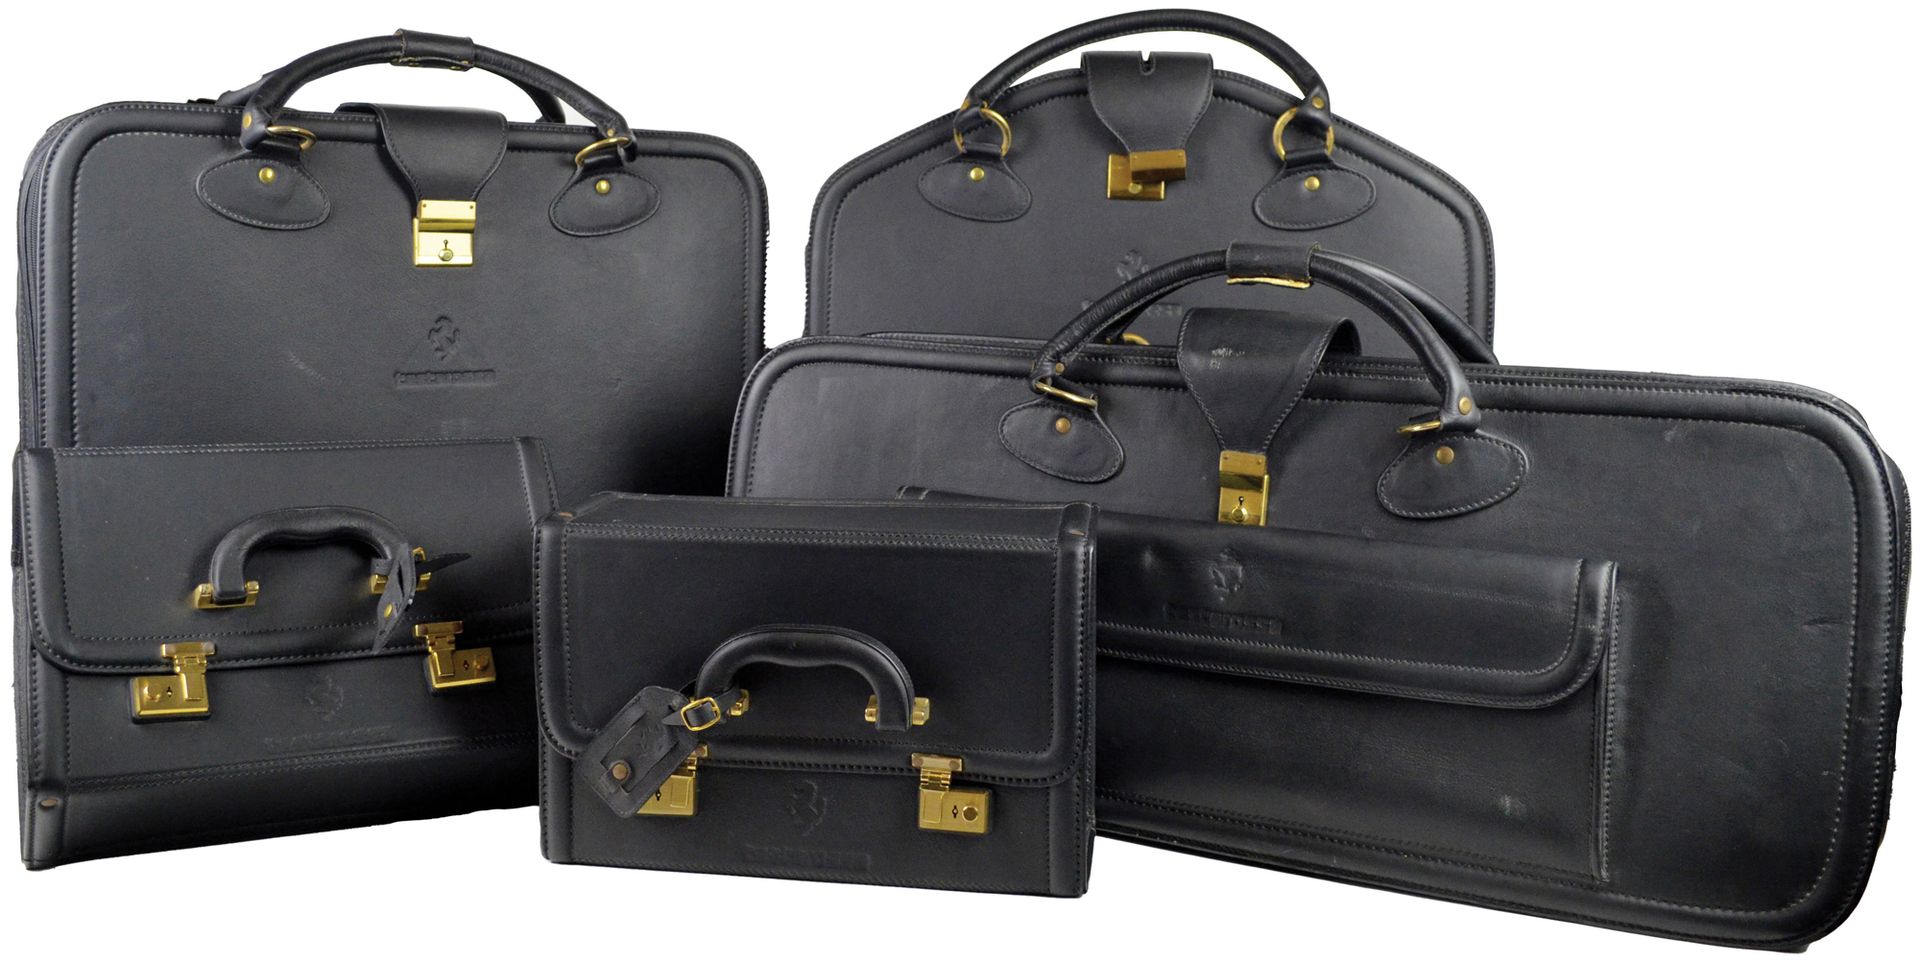 Set de baggages Ferrari Ferrari luggage set